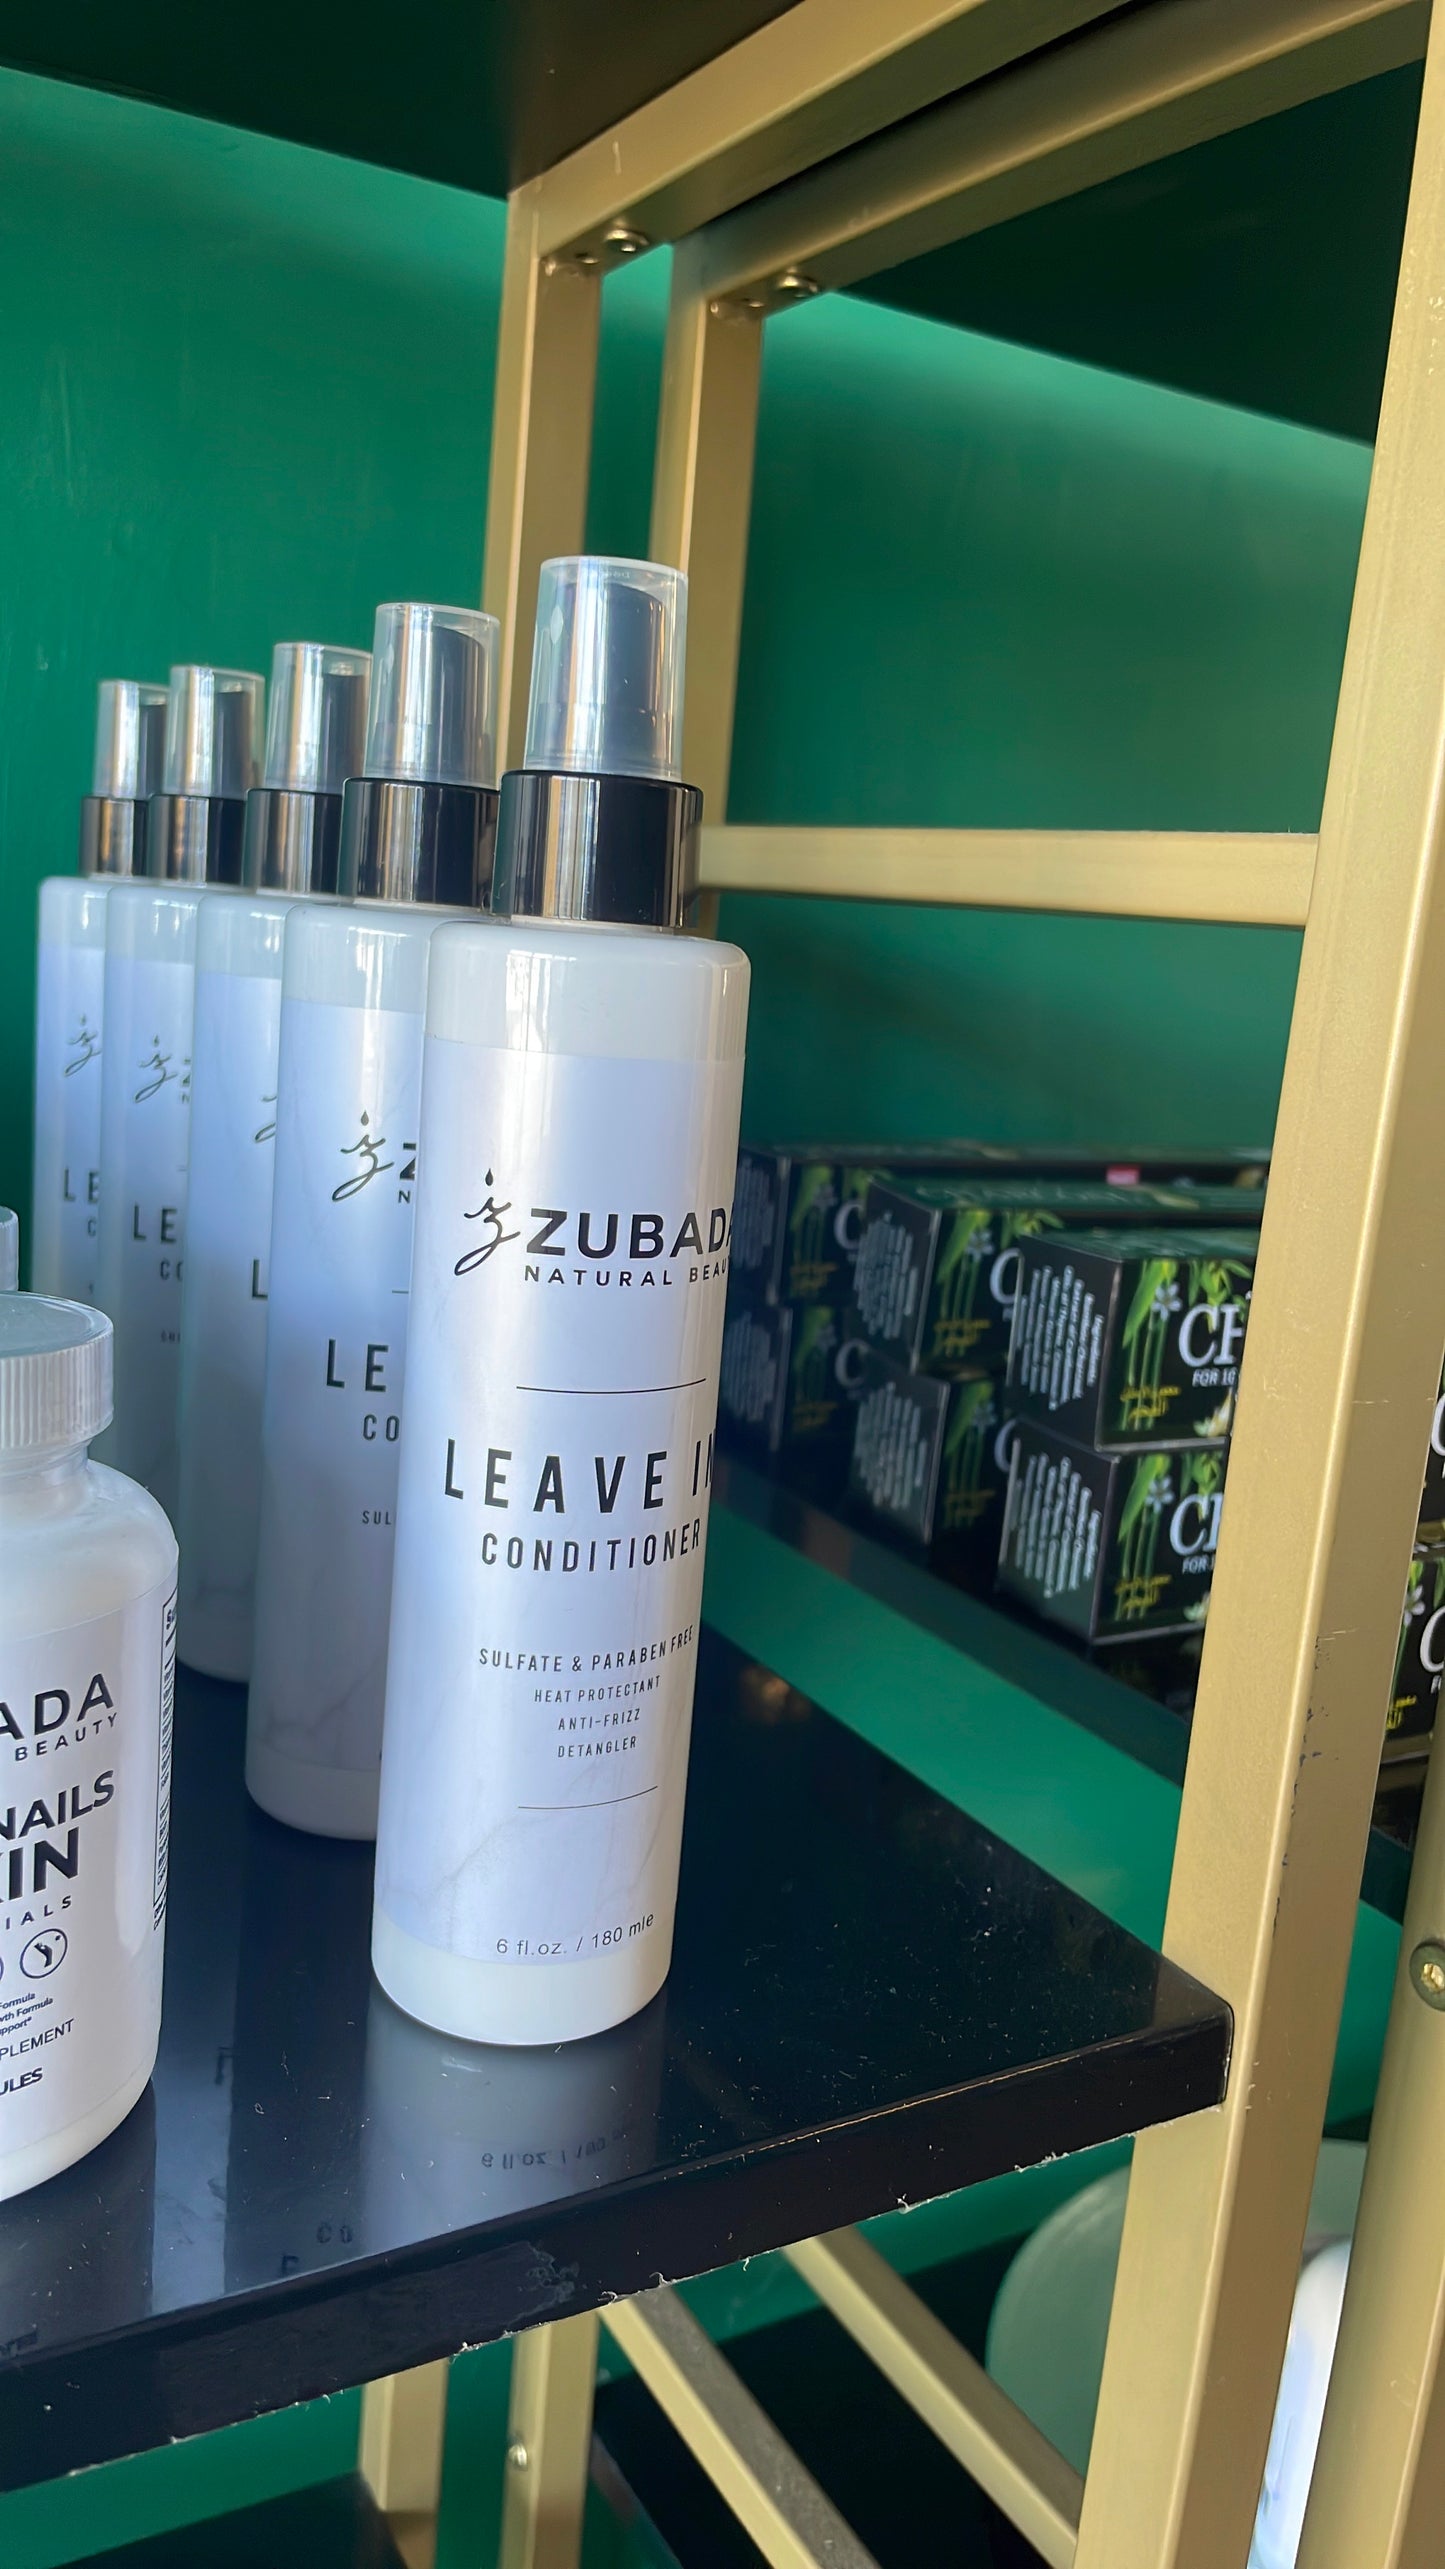 Zubada’s Leave-In Conditioner